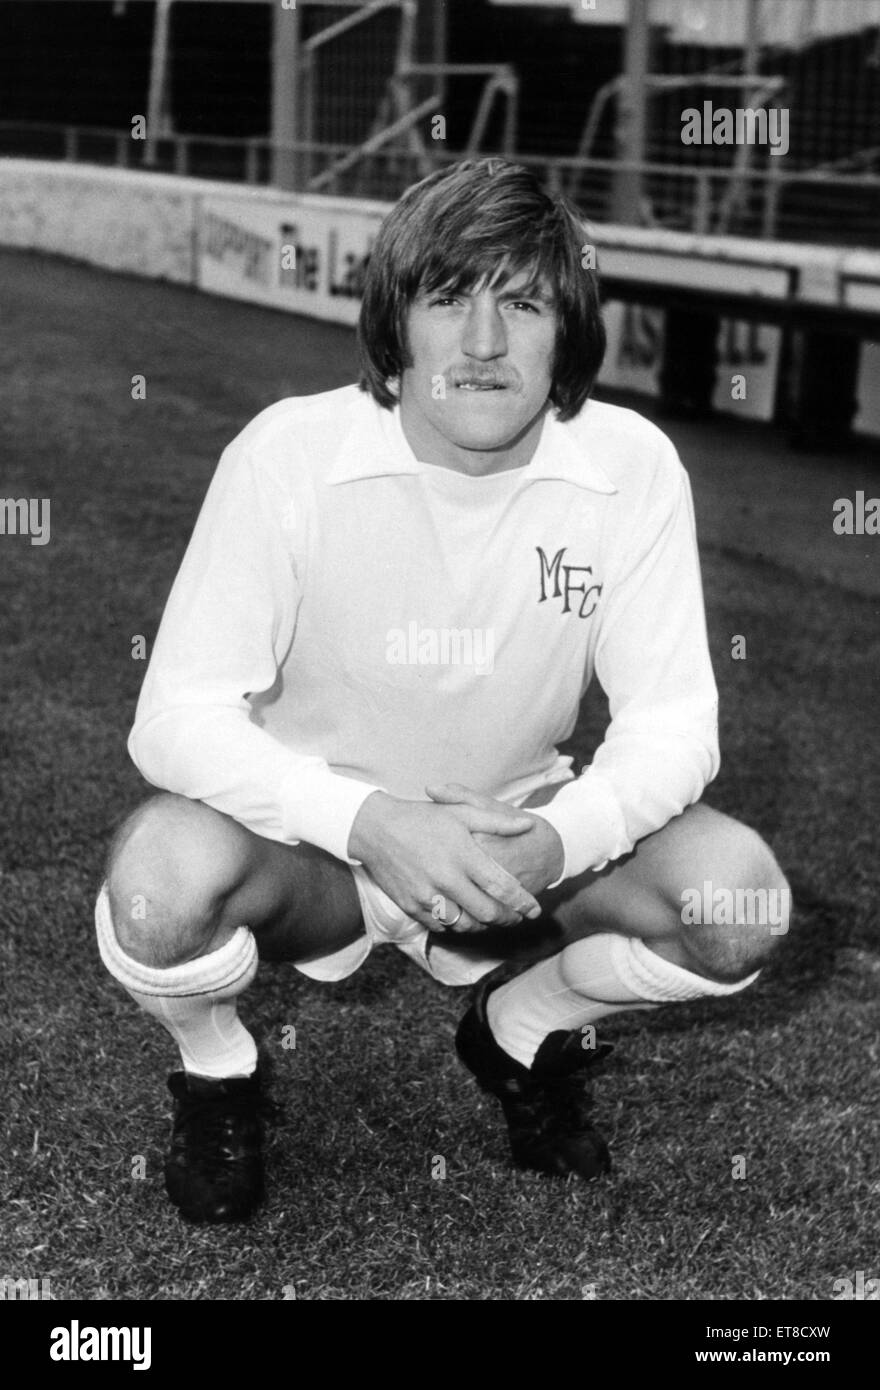 Footballer Alf Wood of Millwall FC. July 1974. Stock Photo